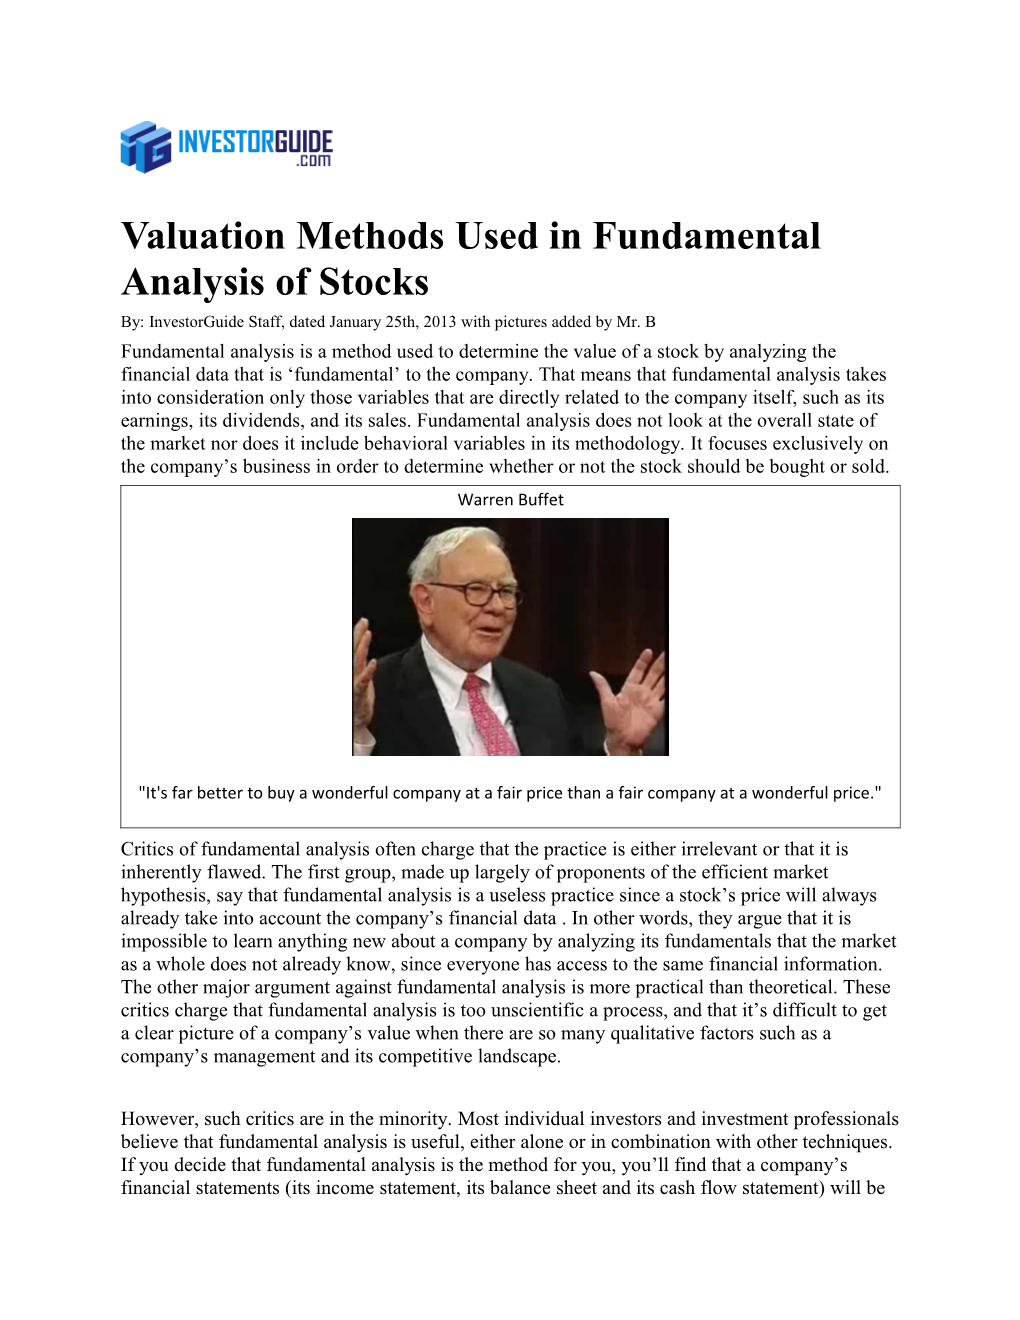 Valuation Methods Used in Fundamental Analysis of Stocks